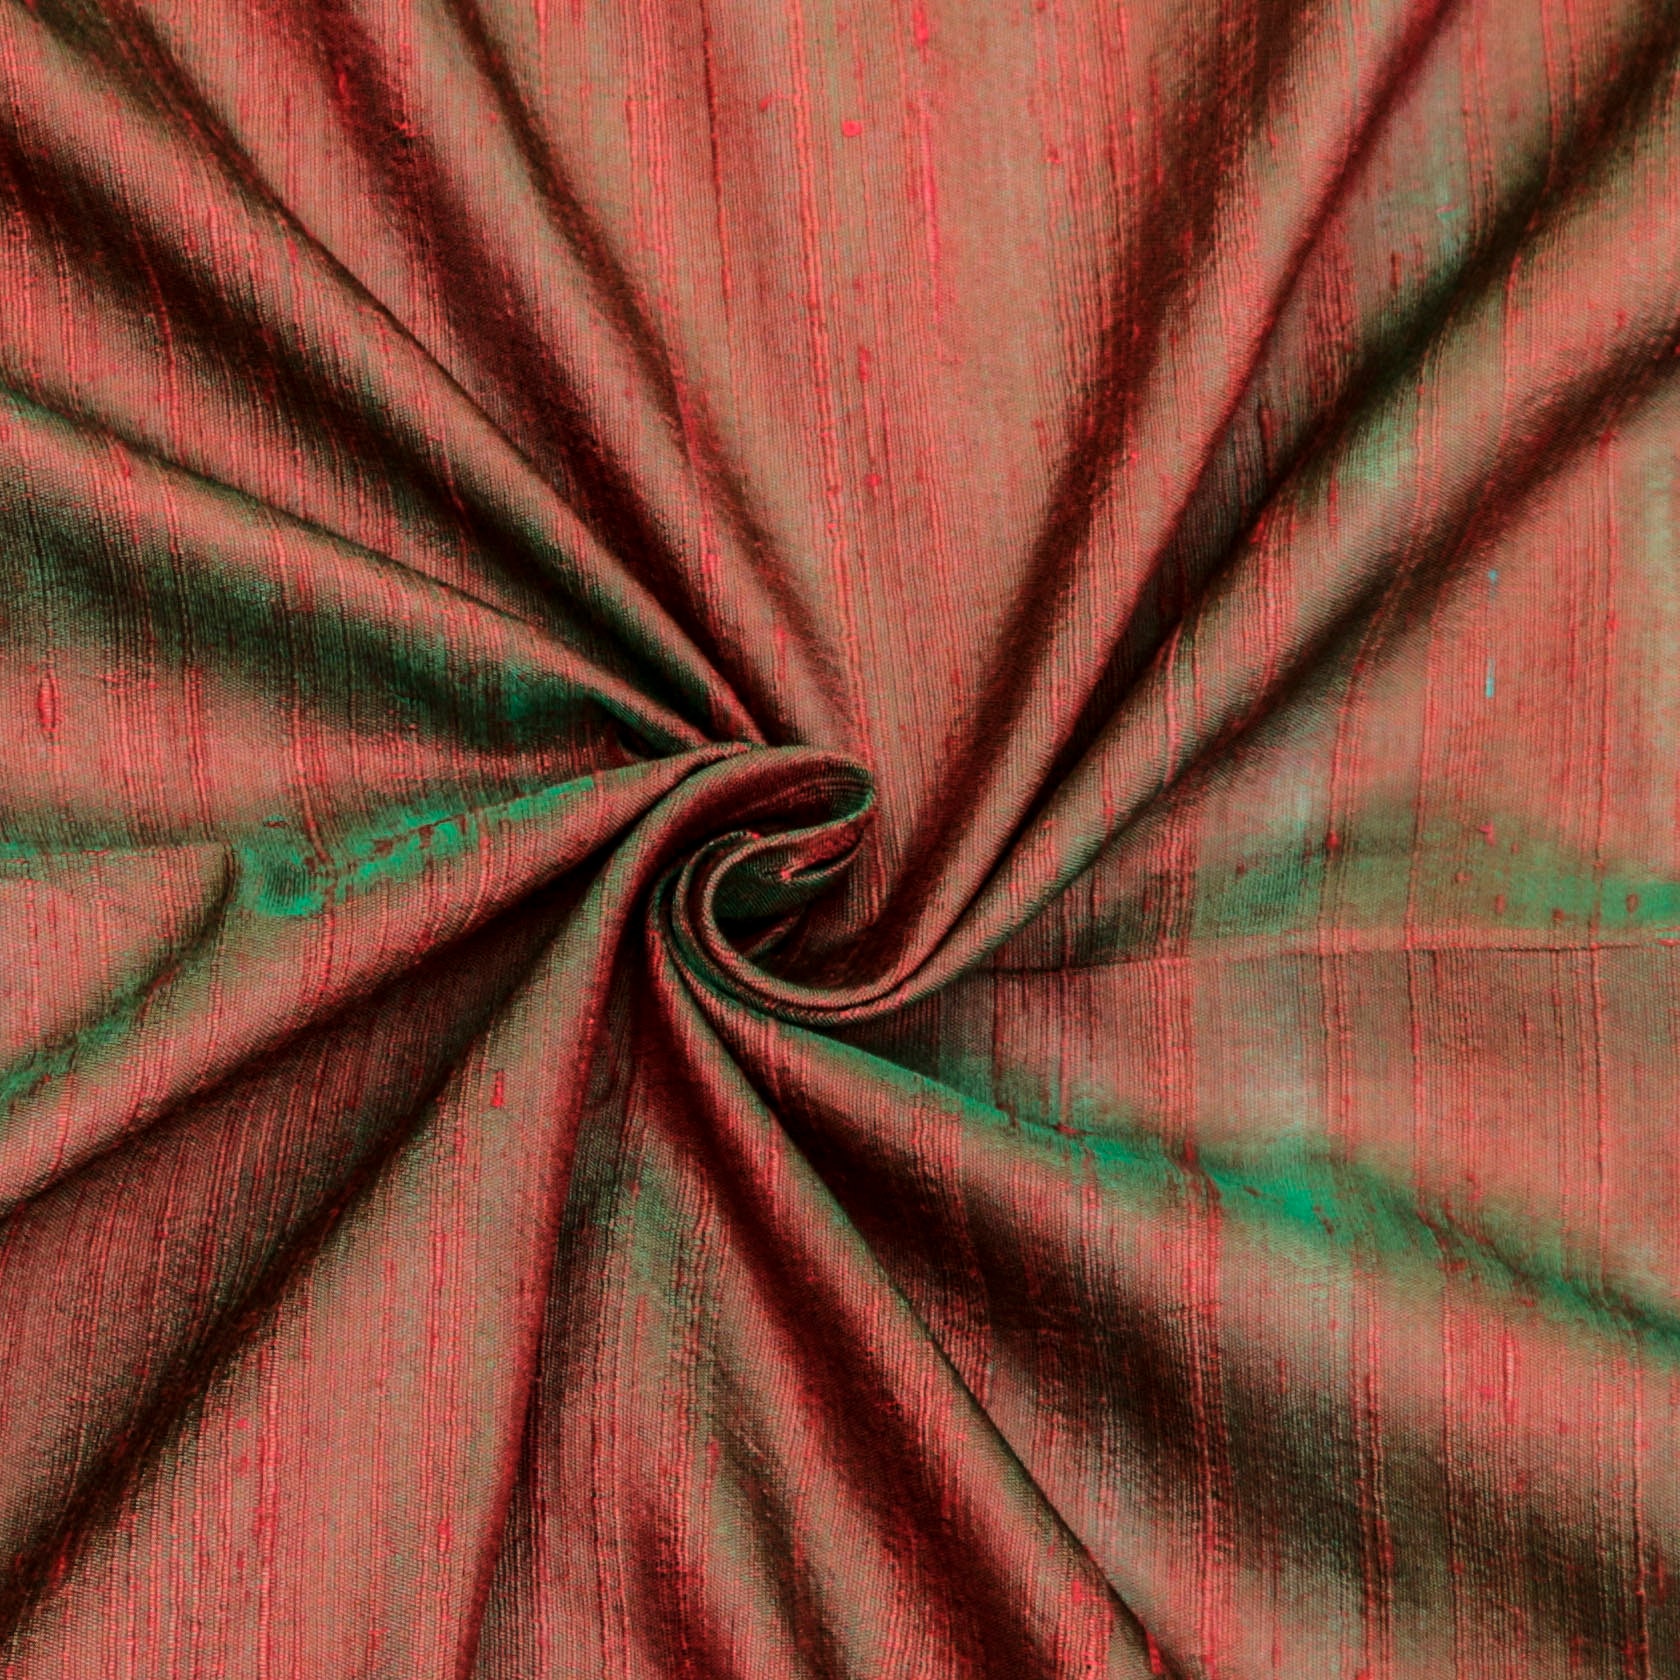 Fabric Mart Direct Dark Fuchsia Pink Silk Dupioni Fabric By The Yard, 41  inches or 104 cm width, 1 Yard Pink Silk Fabric, Slubbed Silk Dupioni,  Bridal Dress Silk Fabric, Wholesale Silk